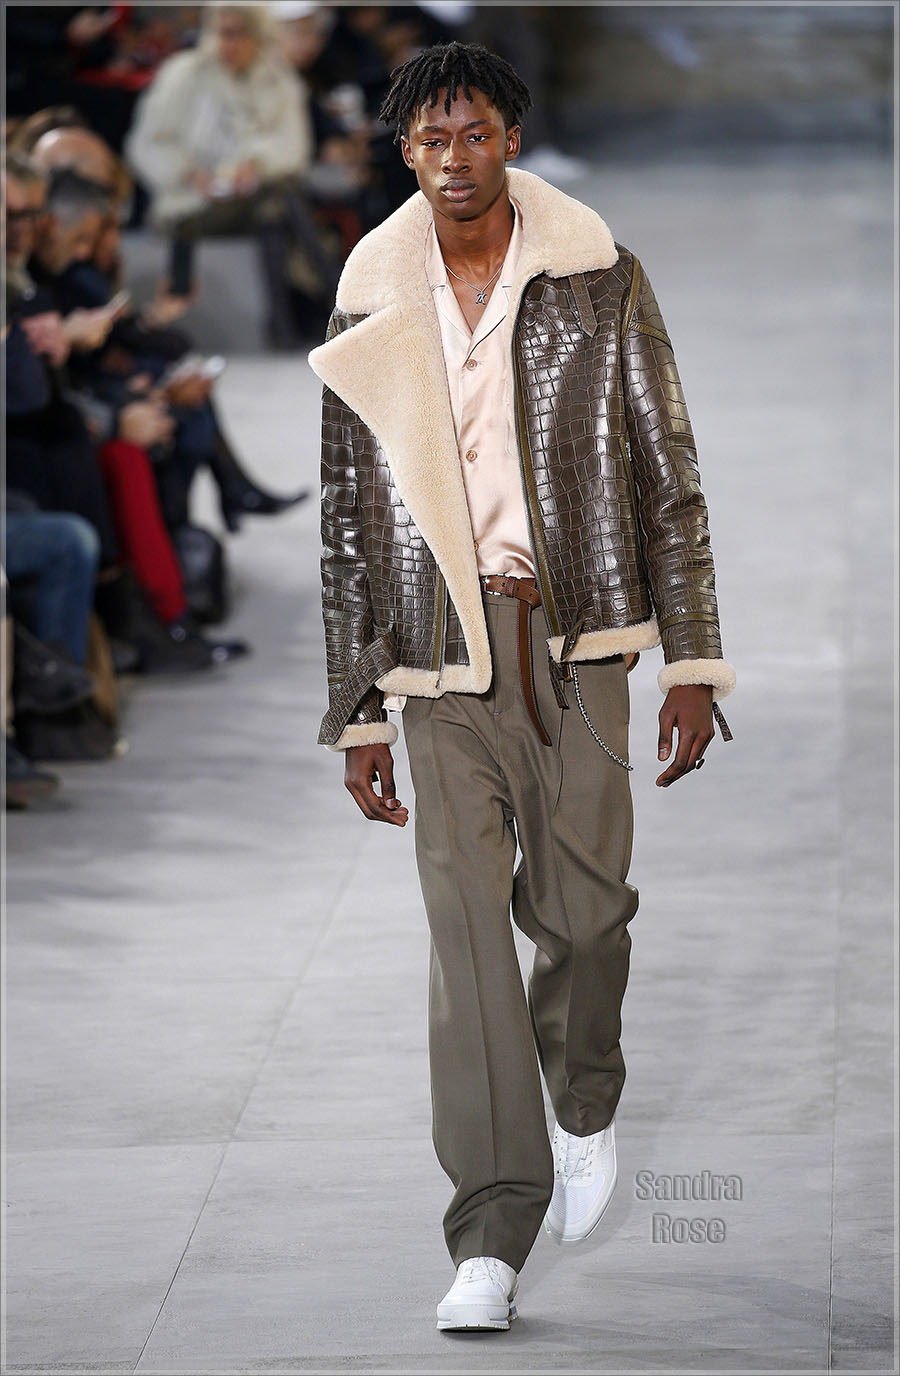 PICS: Louis Vuitton Menswear Runway Show at Paris Fashion Week